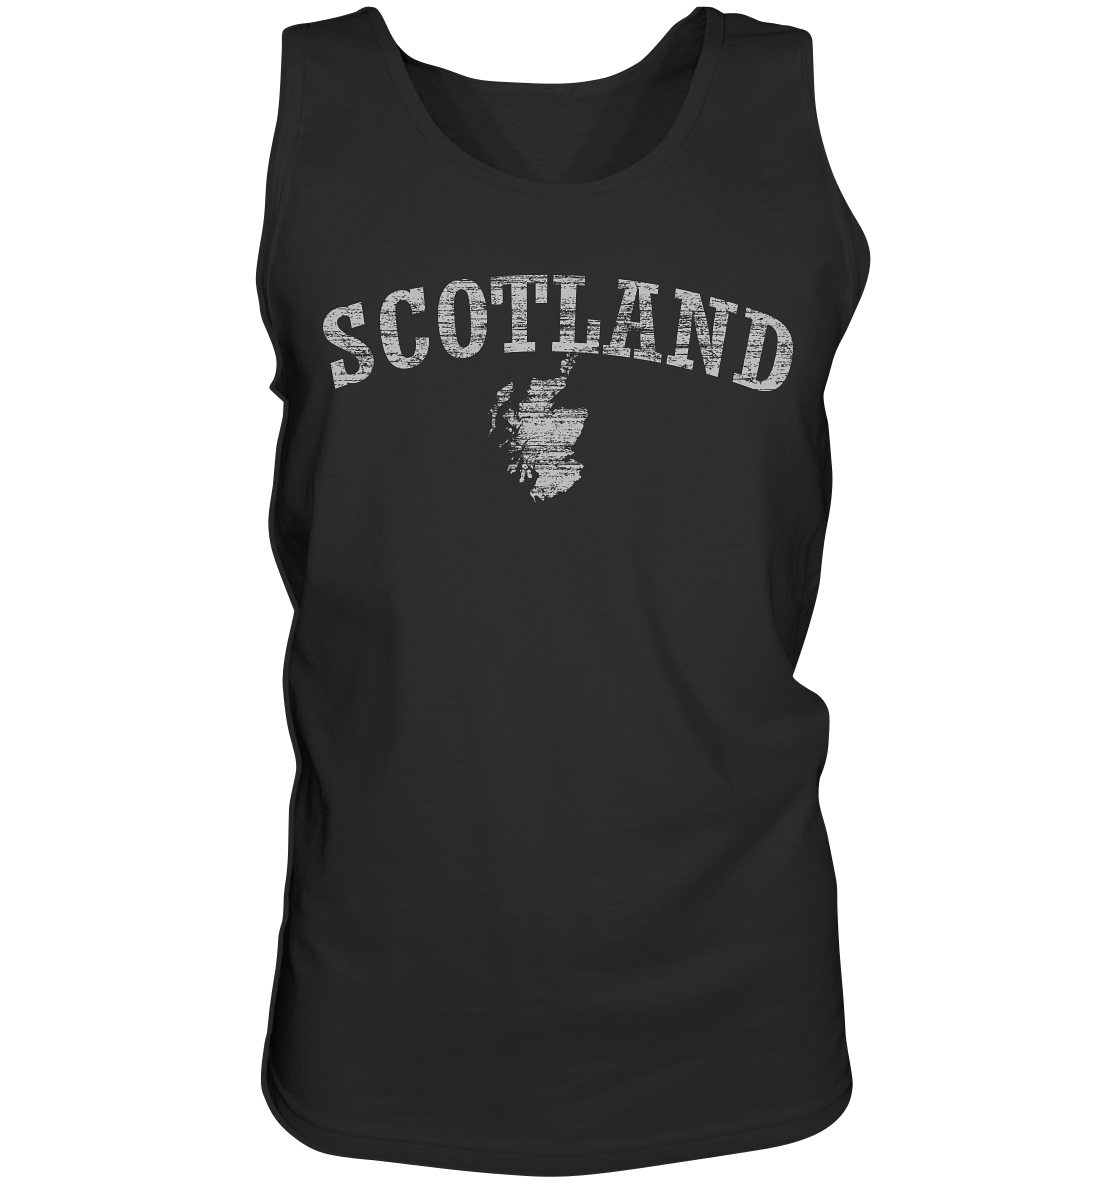 Scotland "Landscape" - Tank-Top